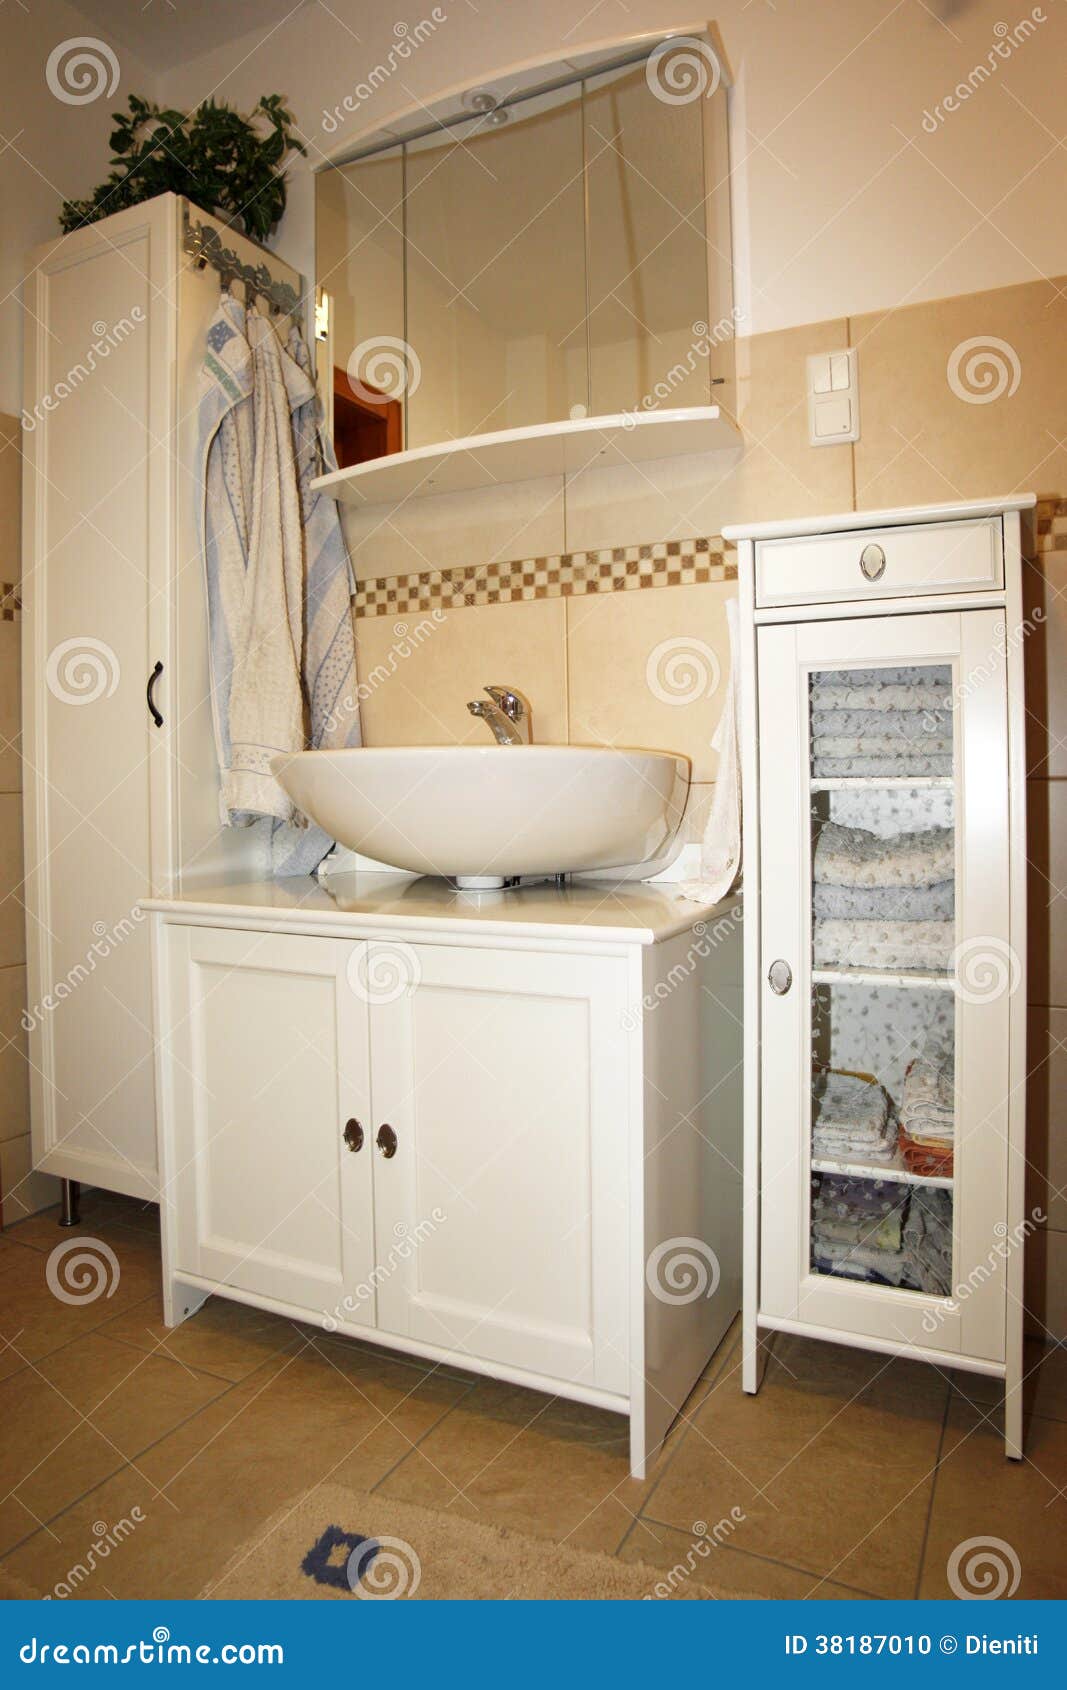  / basin, vanity, mirror, bathmat and bathroom cabinet for towls